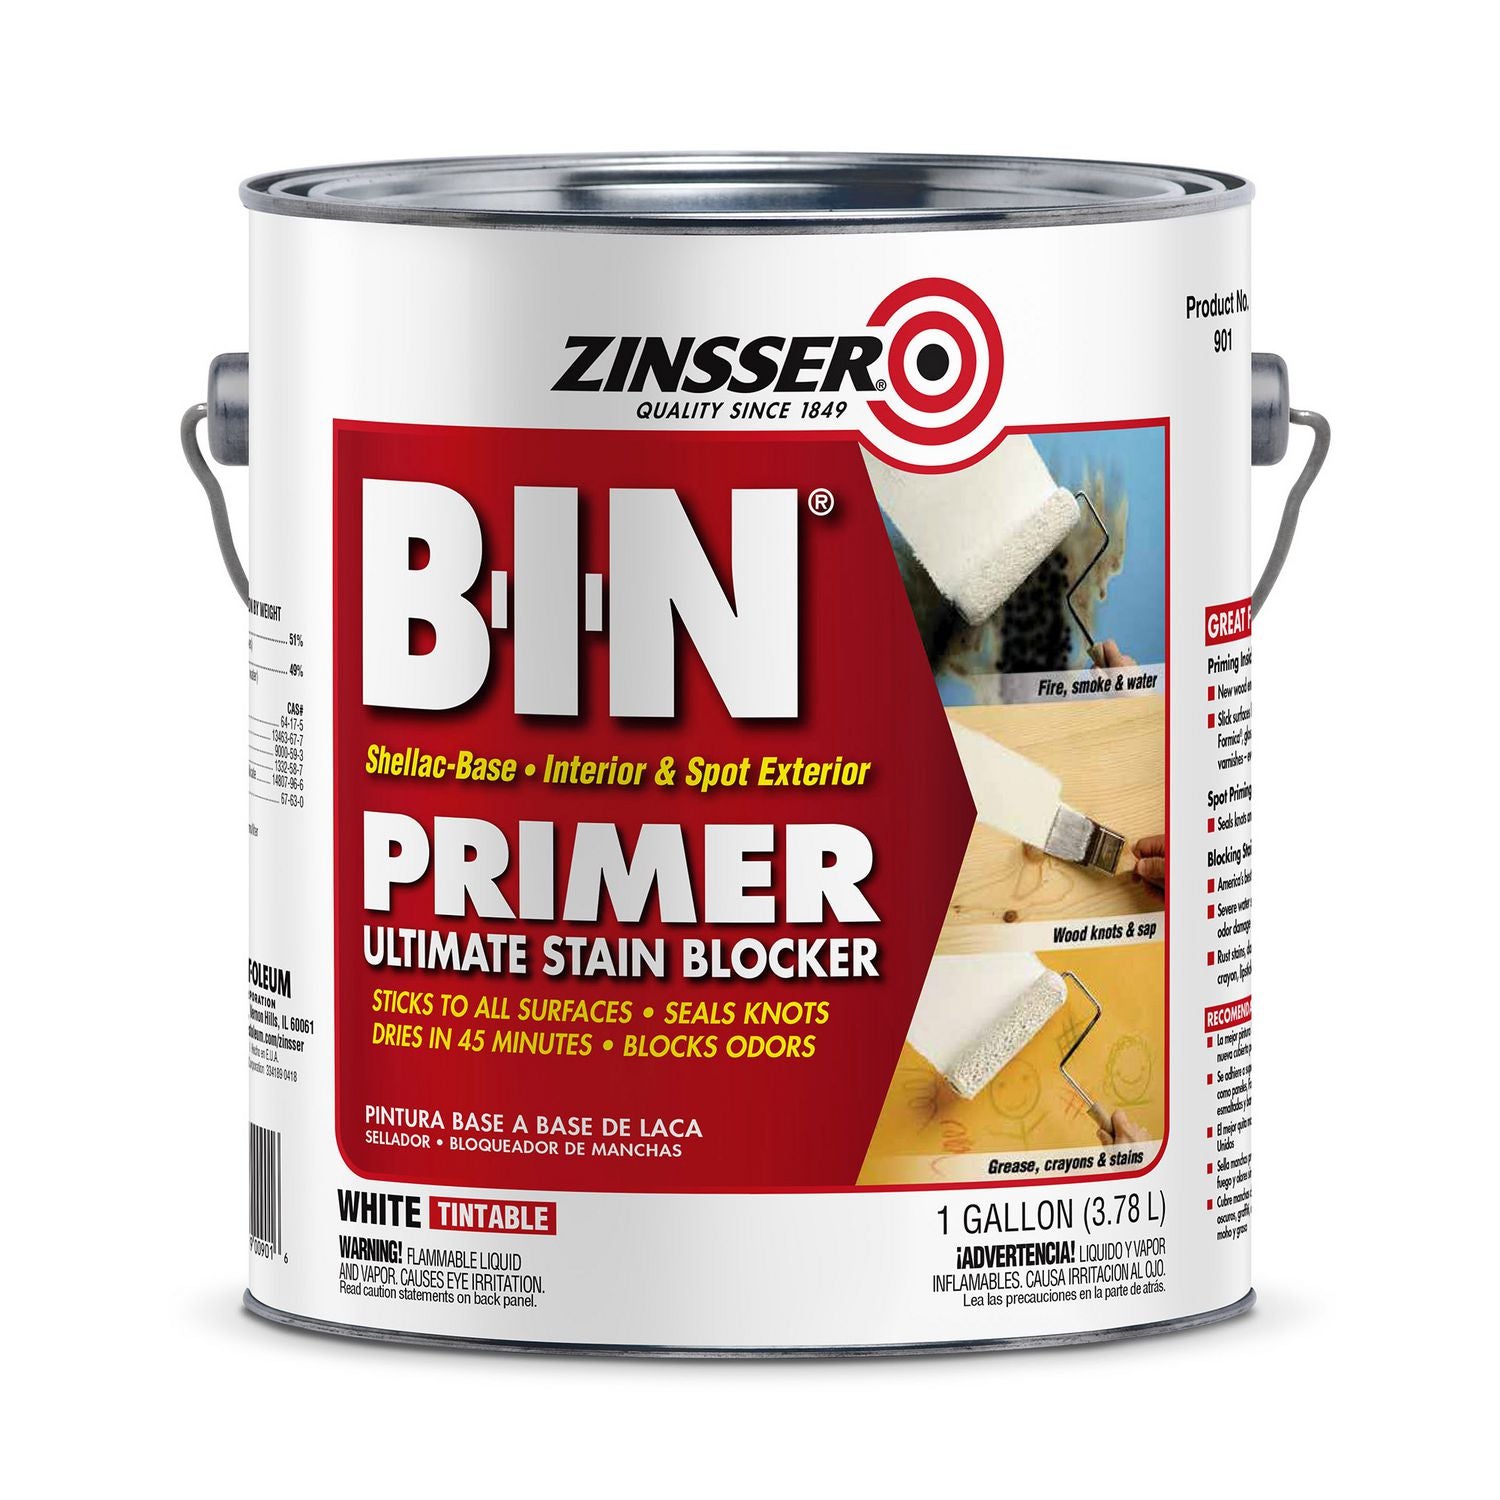 bin-shellac-base-interior-and-spot-exterior-primer-interior-flat-white-1-gal-bucket-pail-4-carton_rst901 - 1